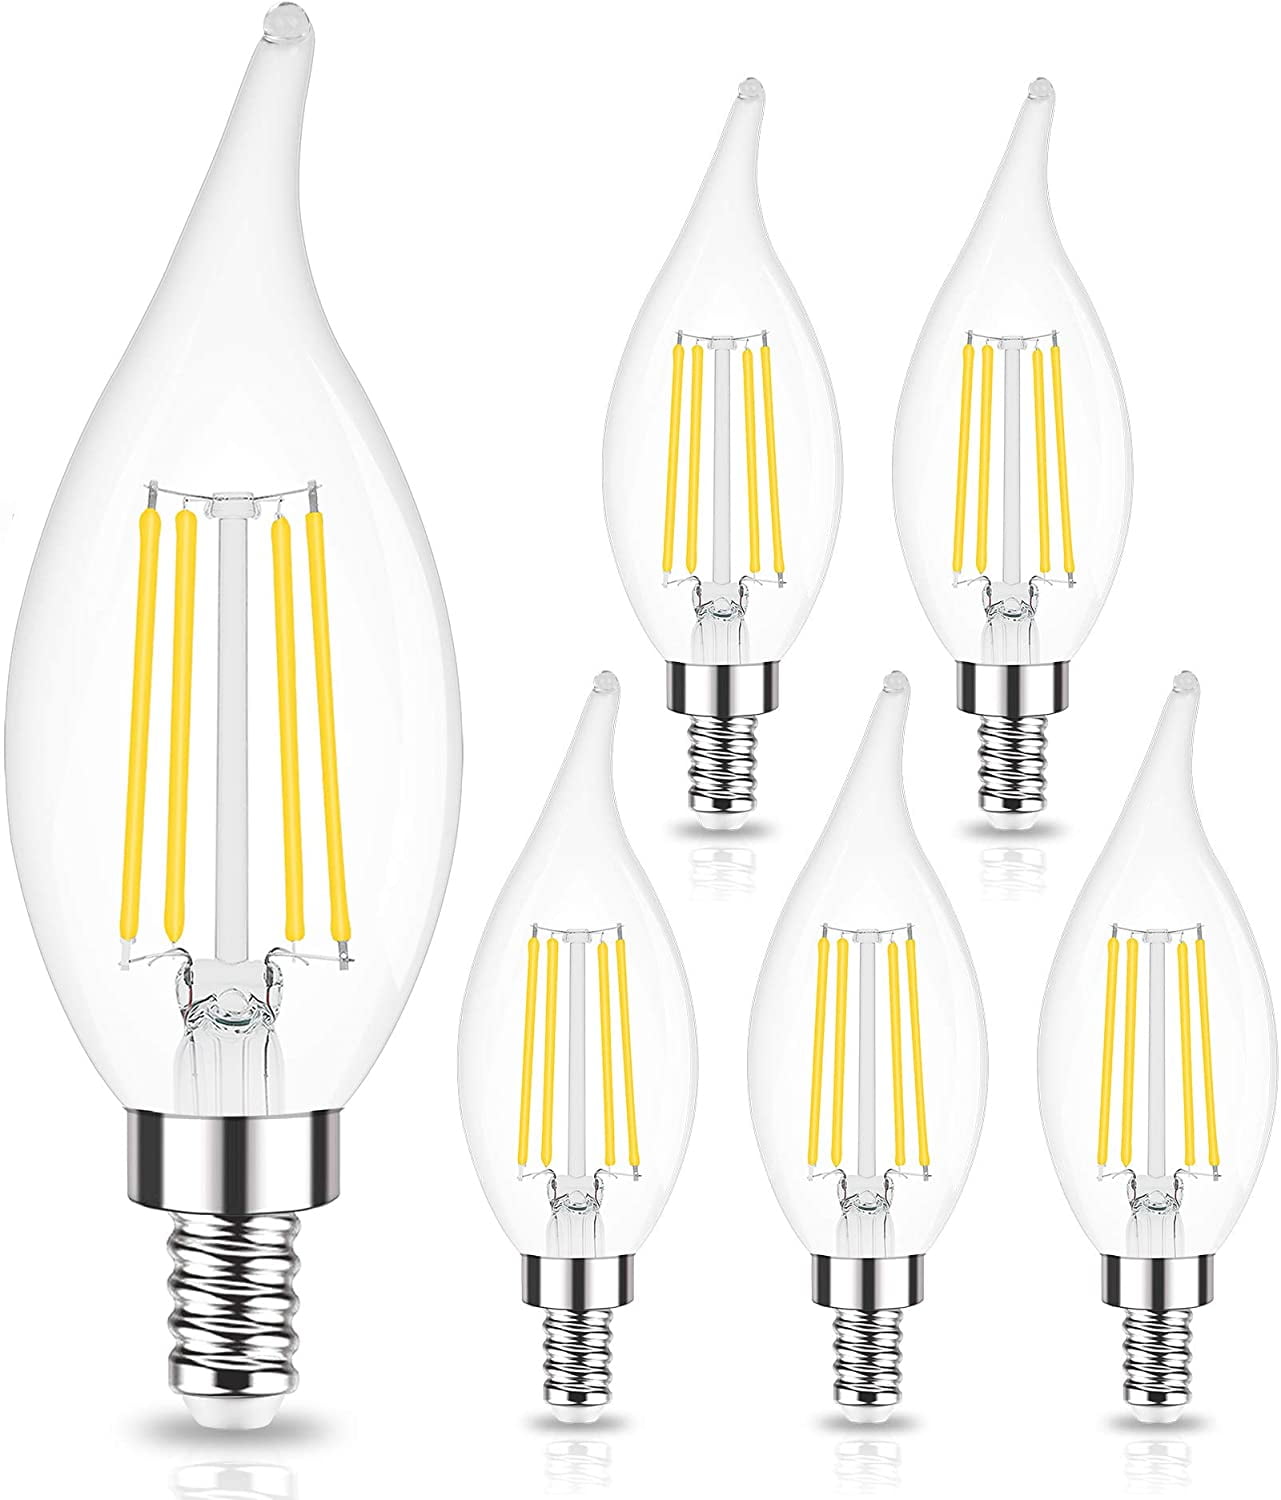 LED Candle Filament Bulb Light C35 Bent Tip Flame Shape 10 Pack E12 LED Dimmable 4W Warm White 2700K 40w Candelabra Halogen Bulb Vintage Led Chandelier Light Bulbs 